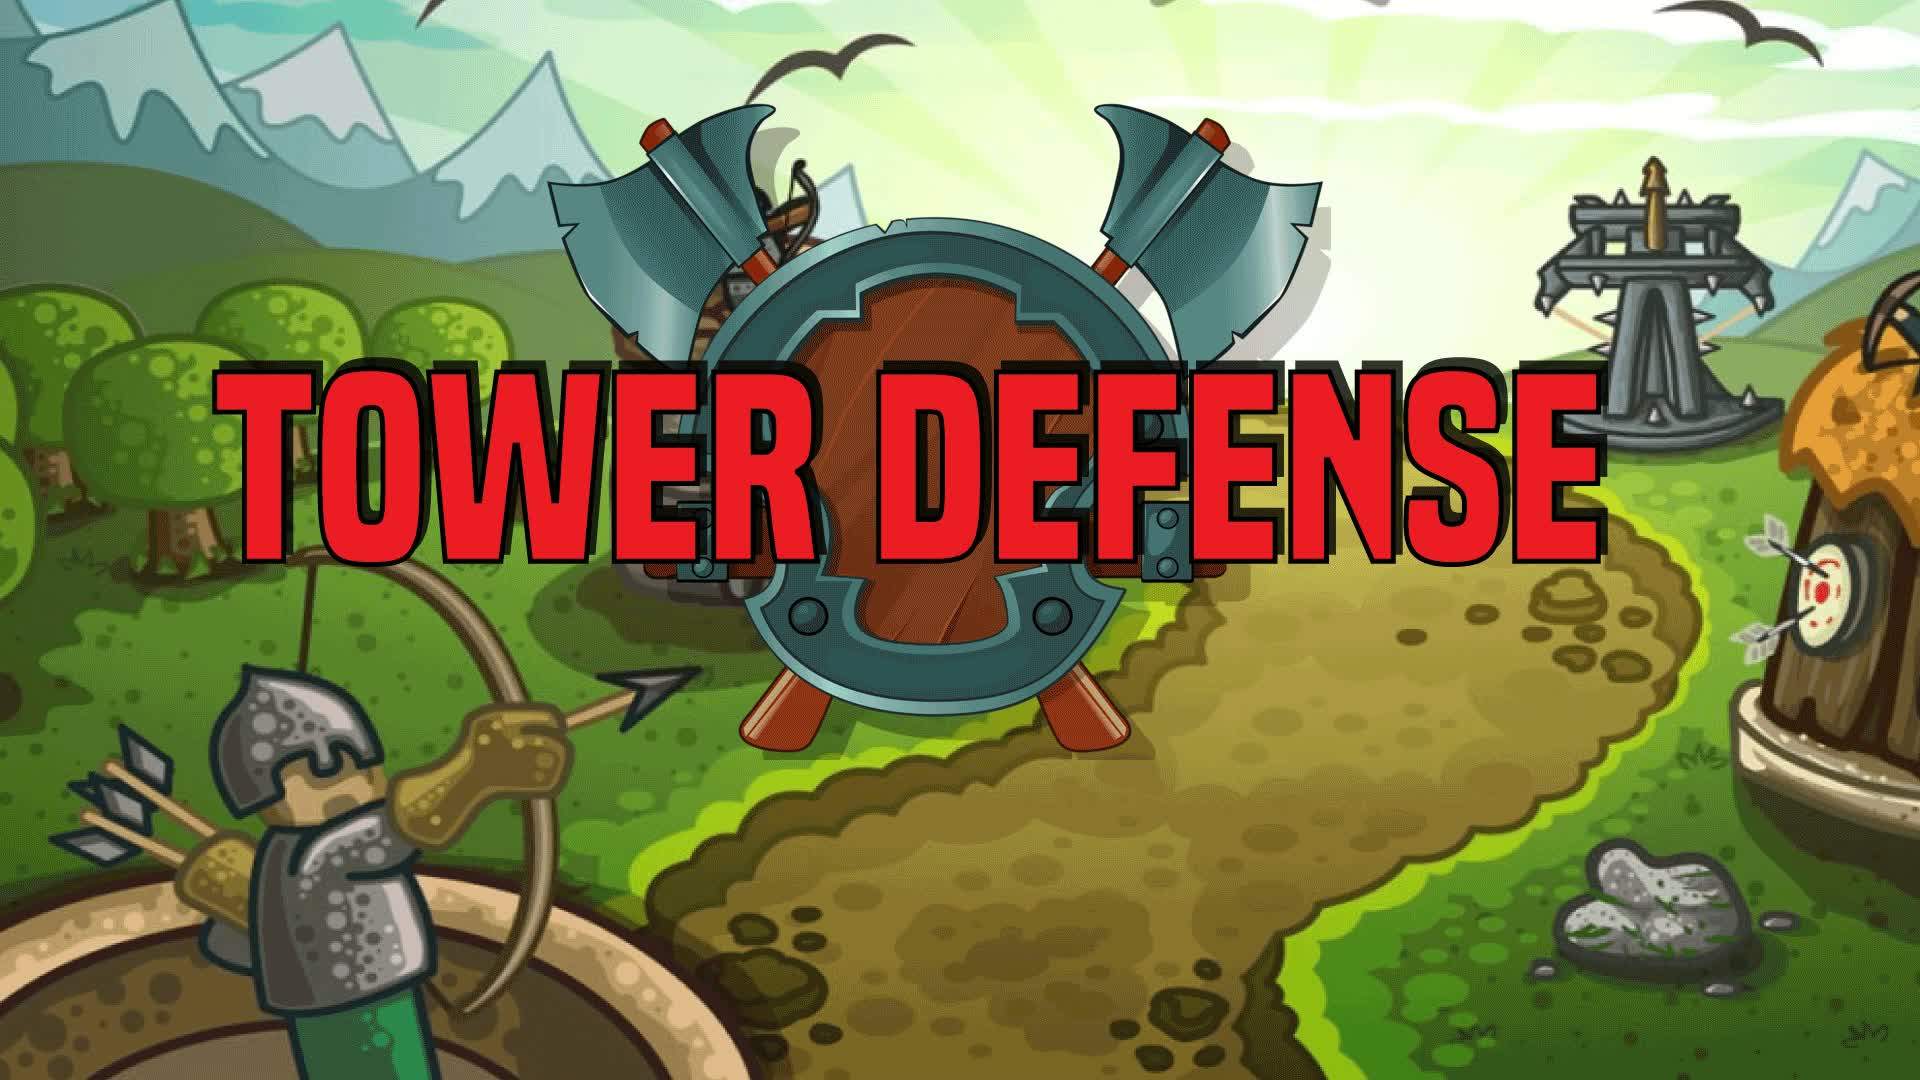 Tower Defense - Fortnite Creative Mini Games and Fun Map Code